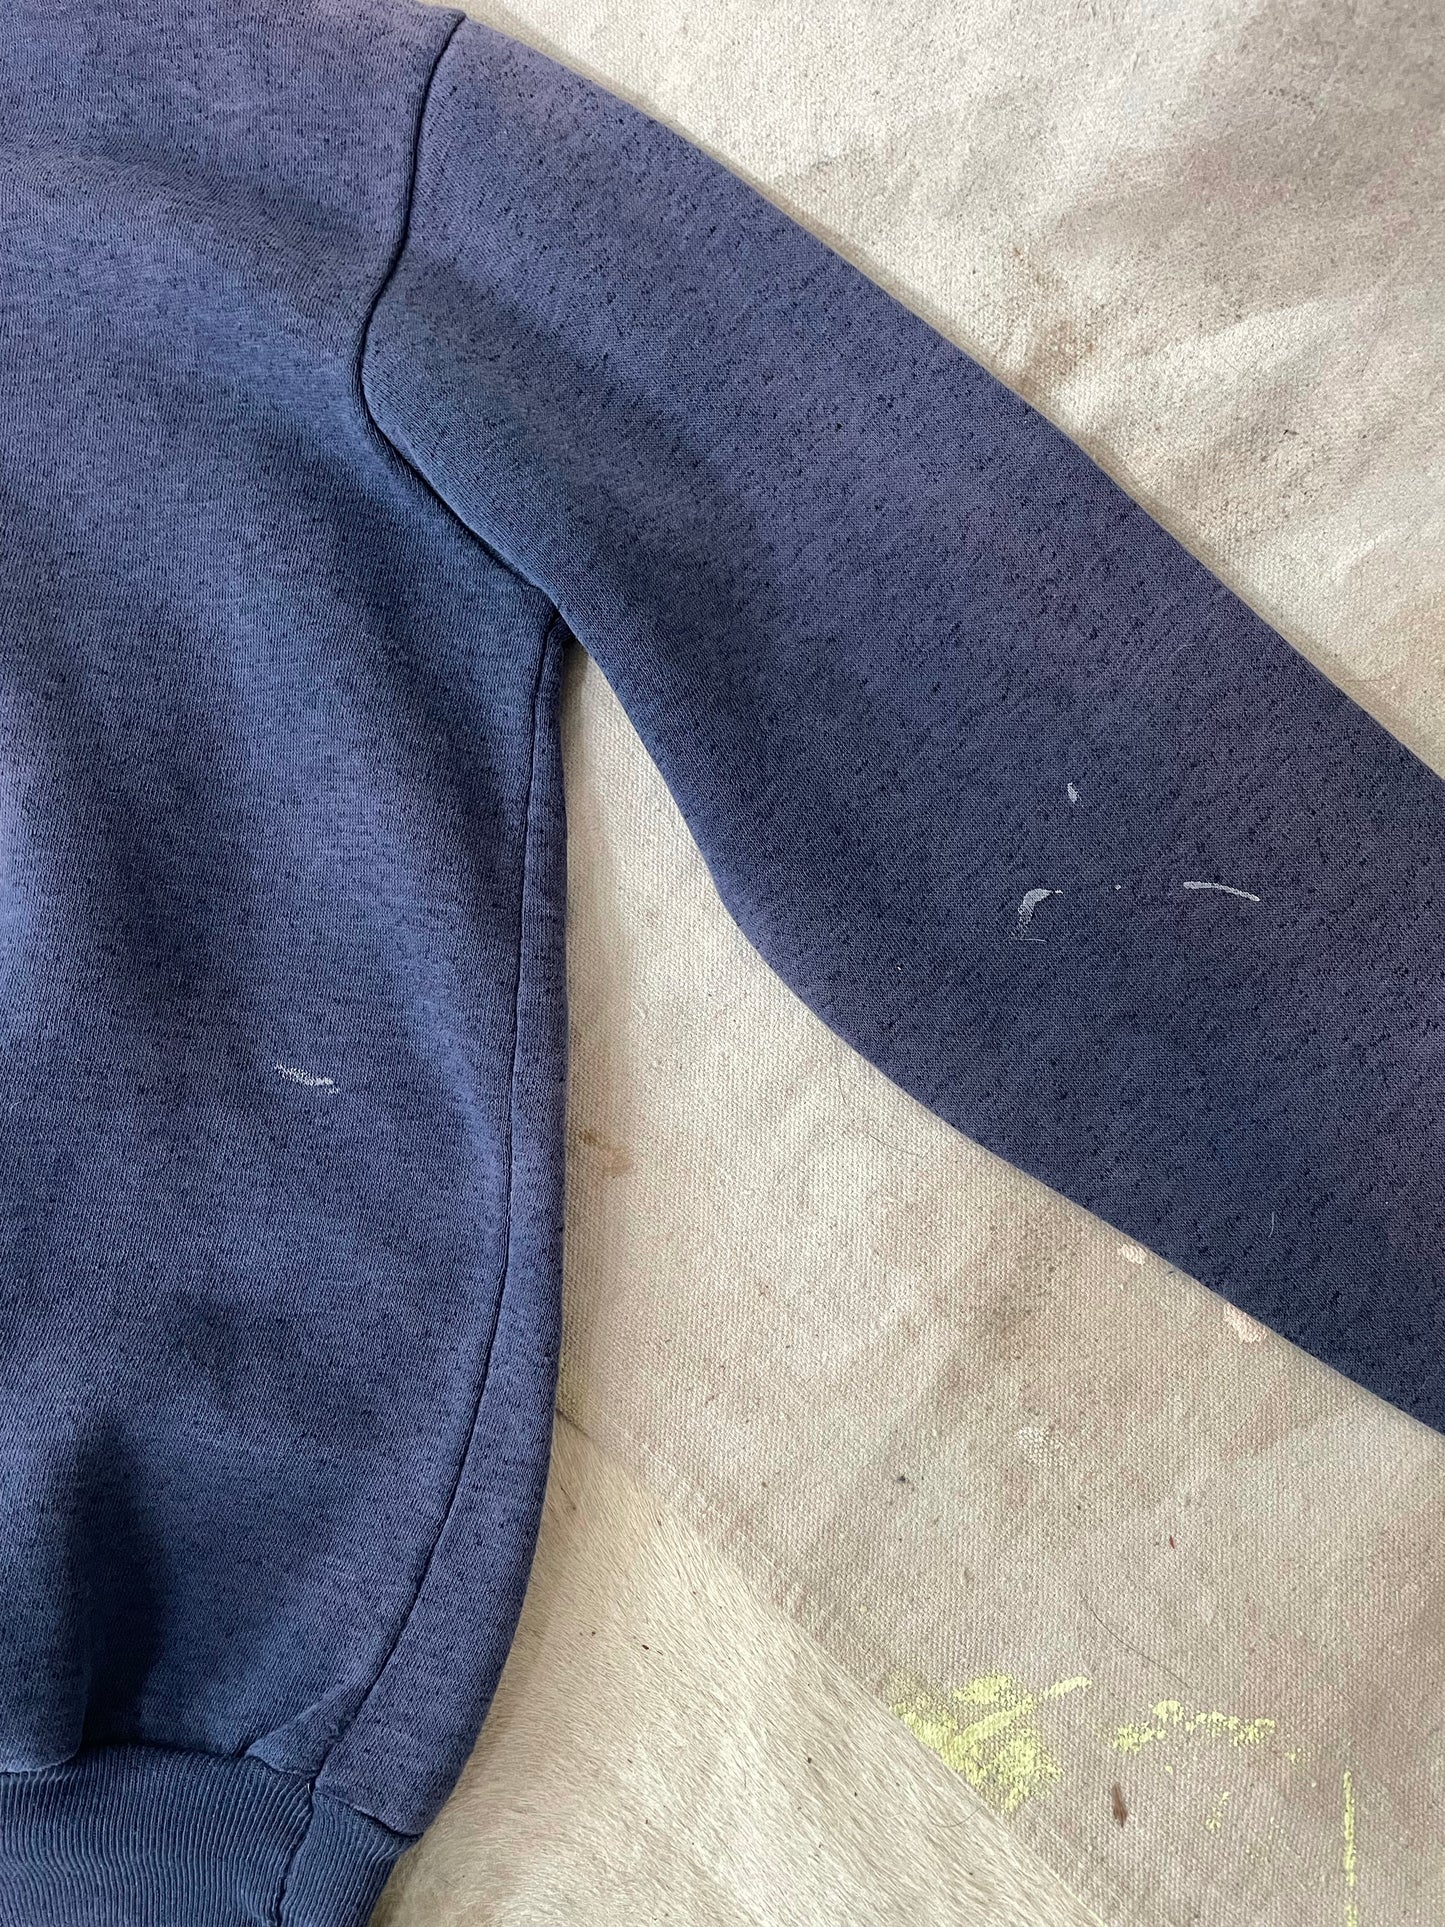 80s/90s Faded Navy Blue Sweatshirt